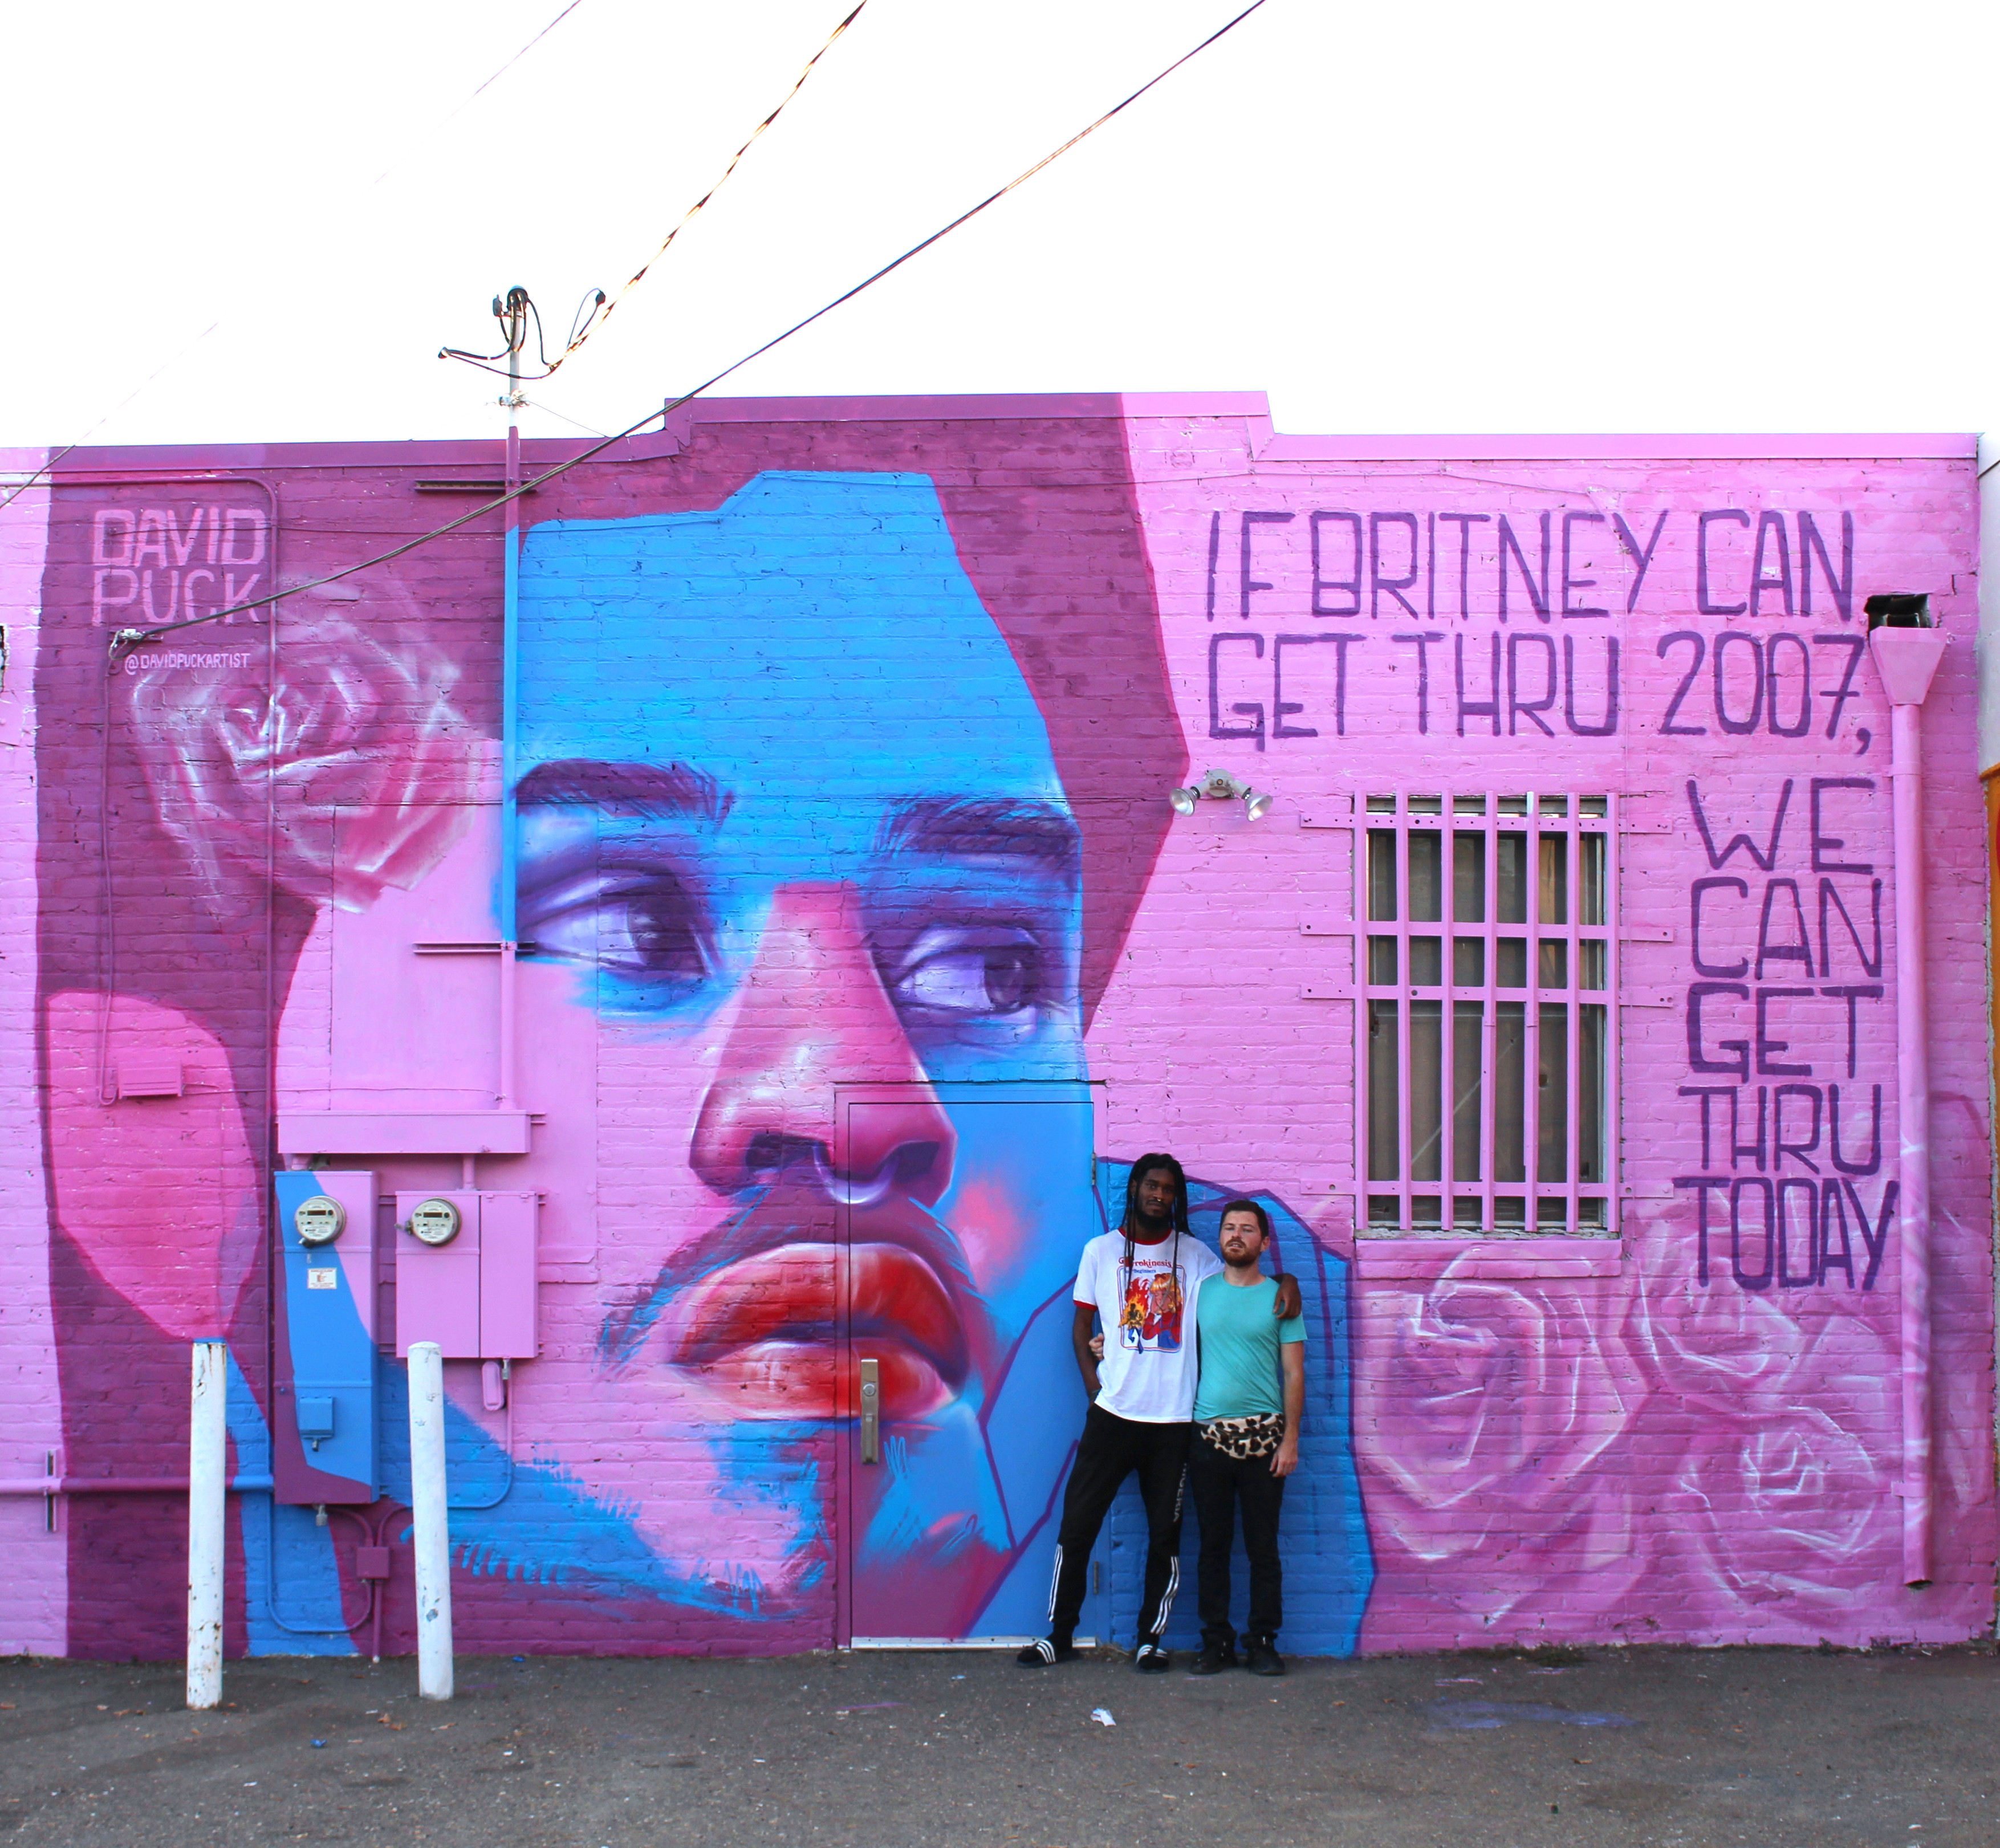 queer Street art mural of trans activist, by David Puck, in Sacramento California